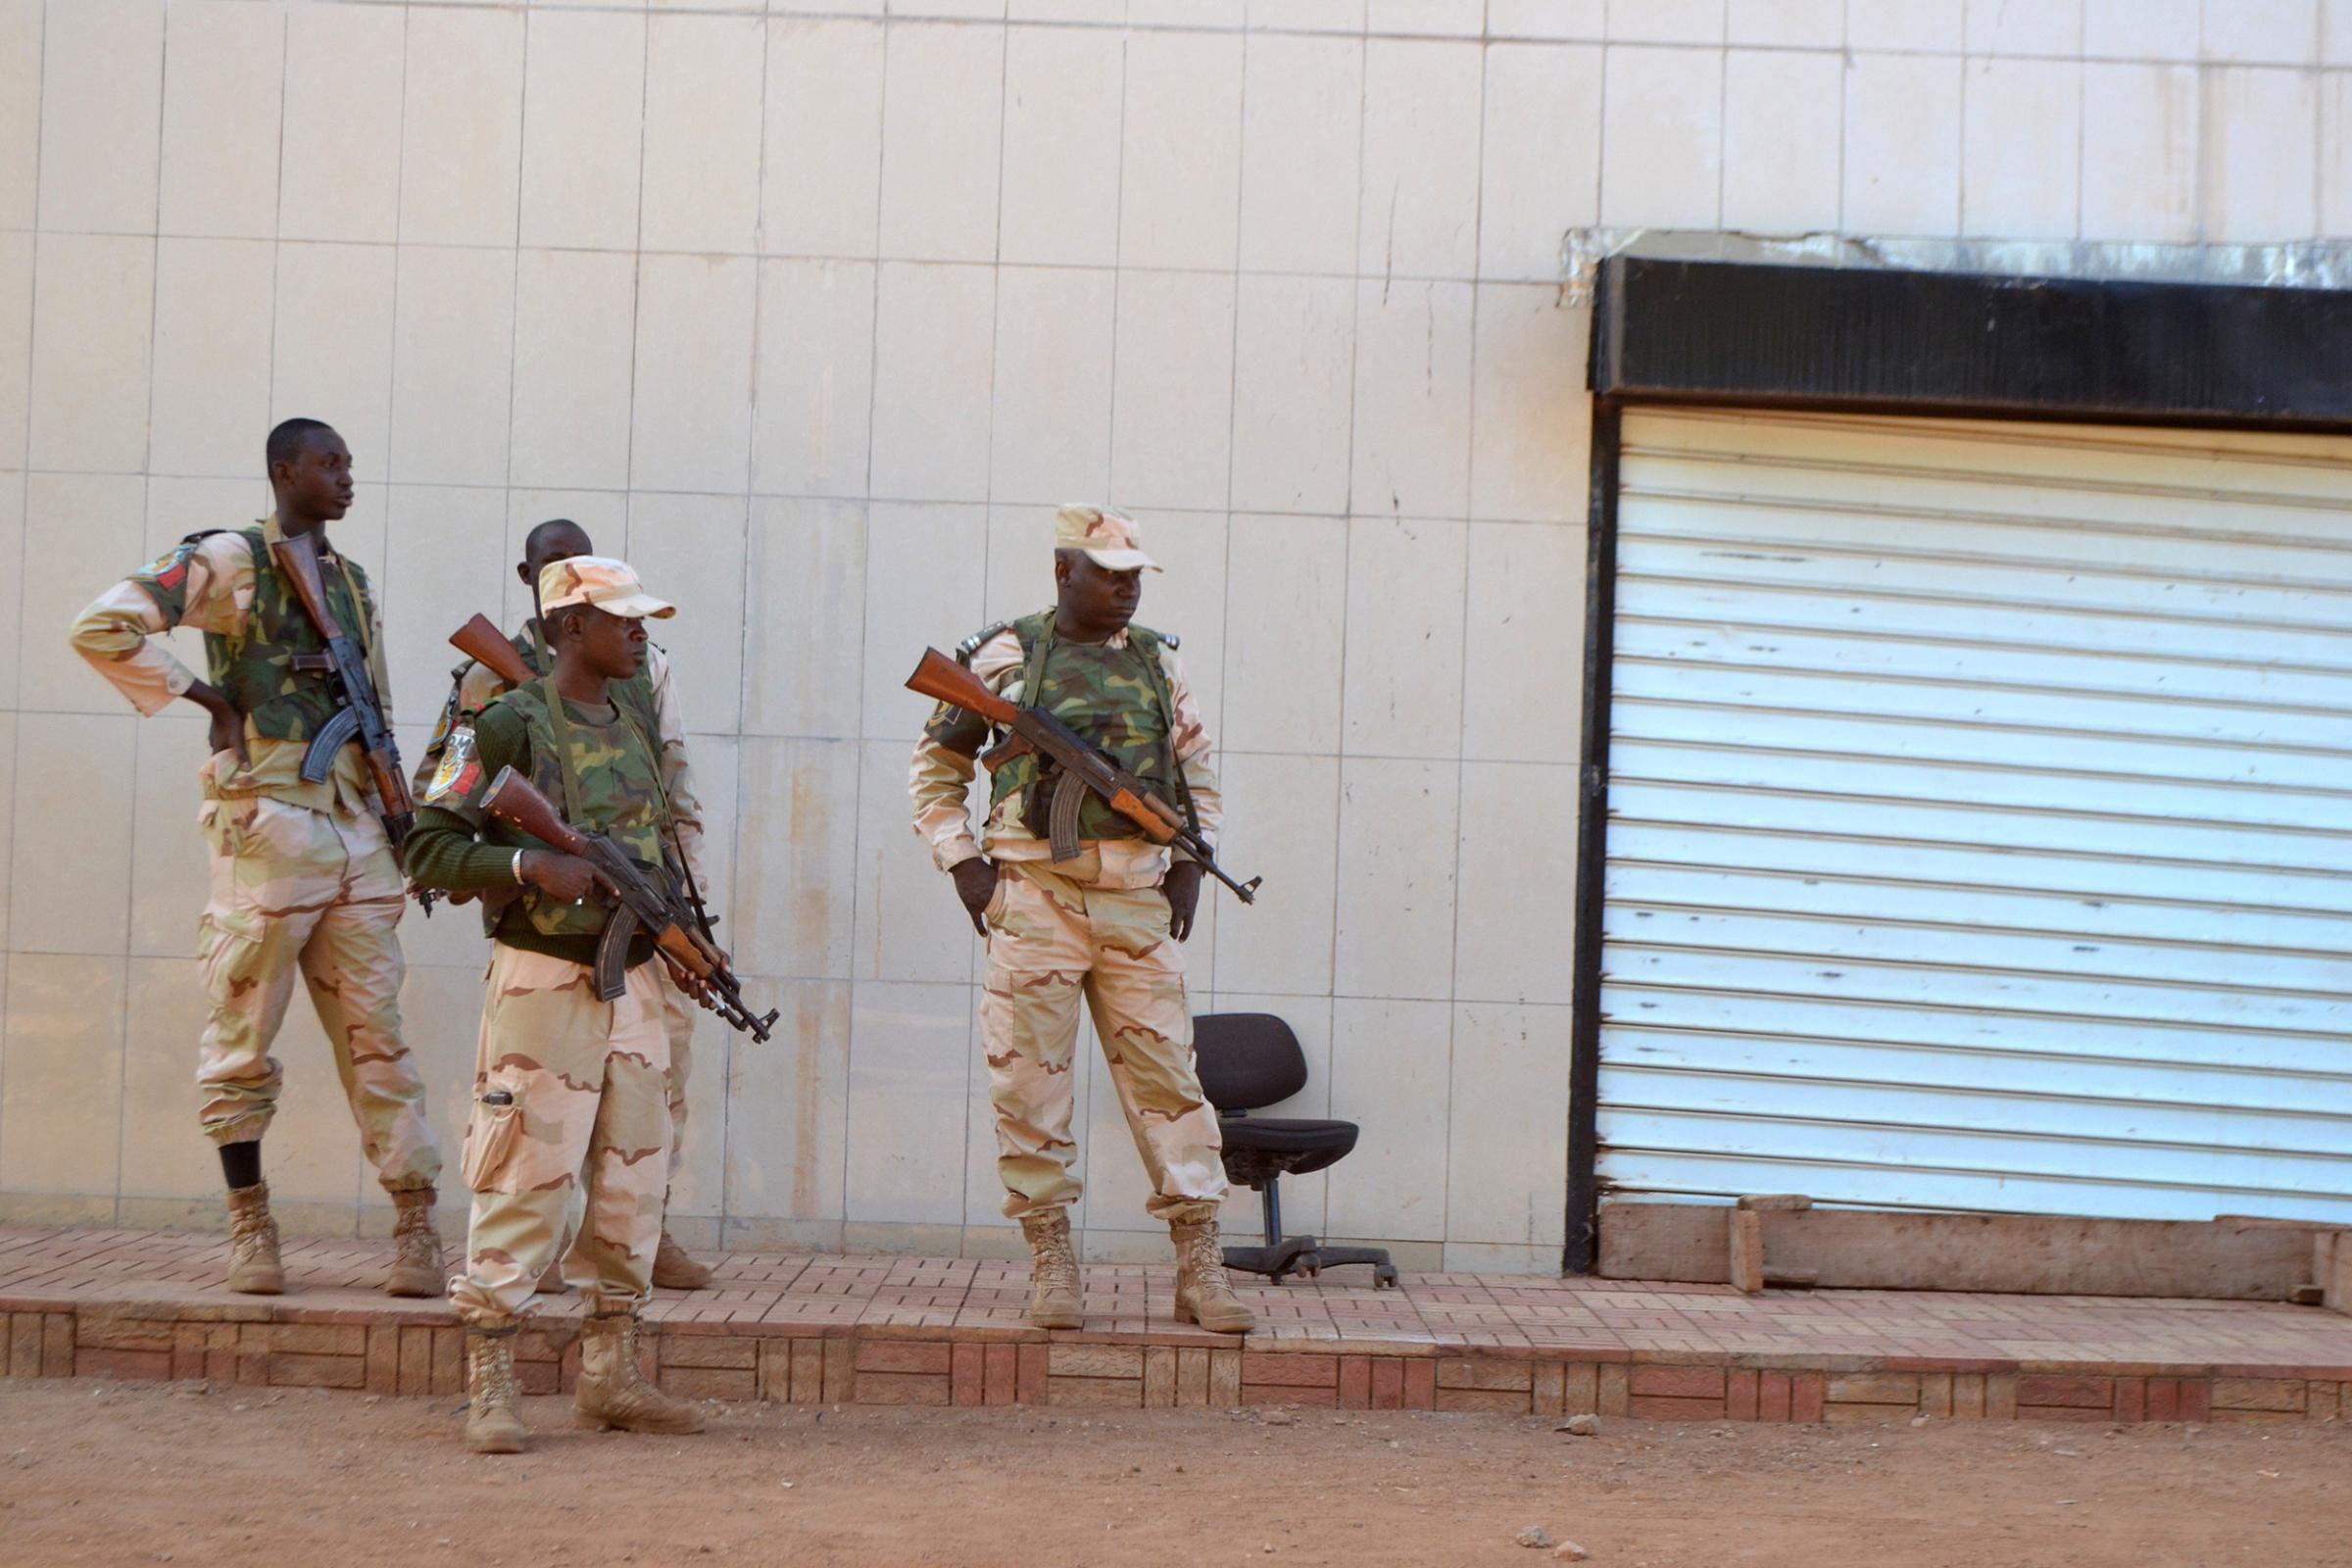 170 hostage seized in Radisson Blu hotel in Mali's capital Bamako